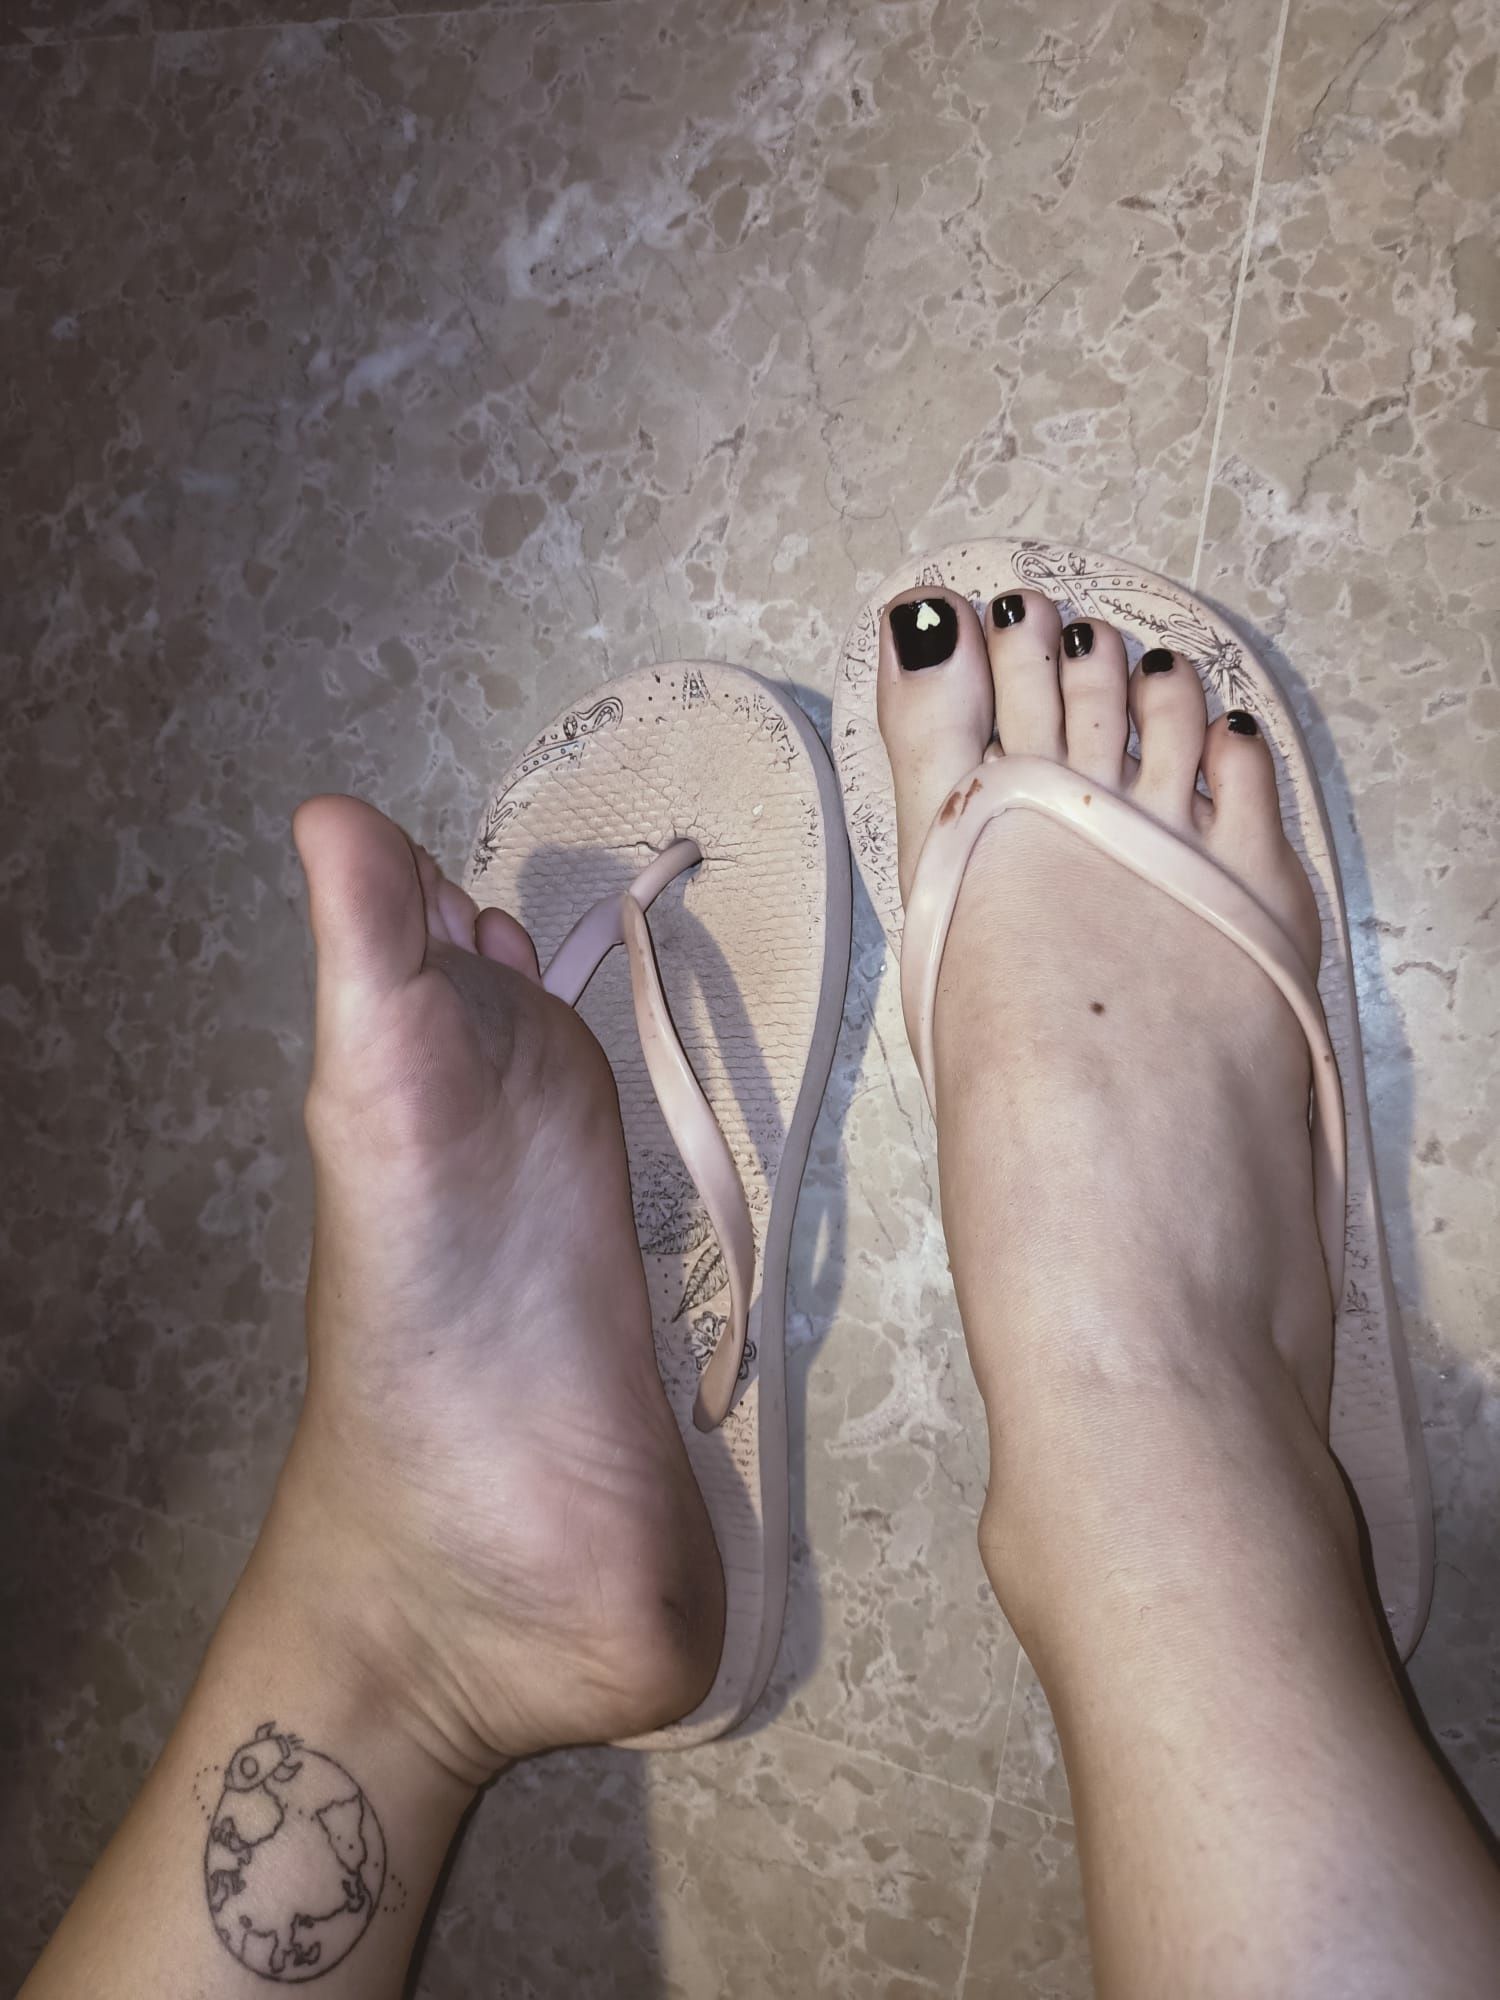 My feet #8